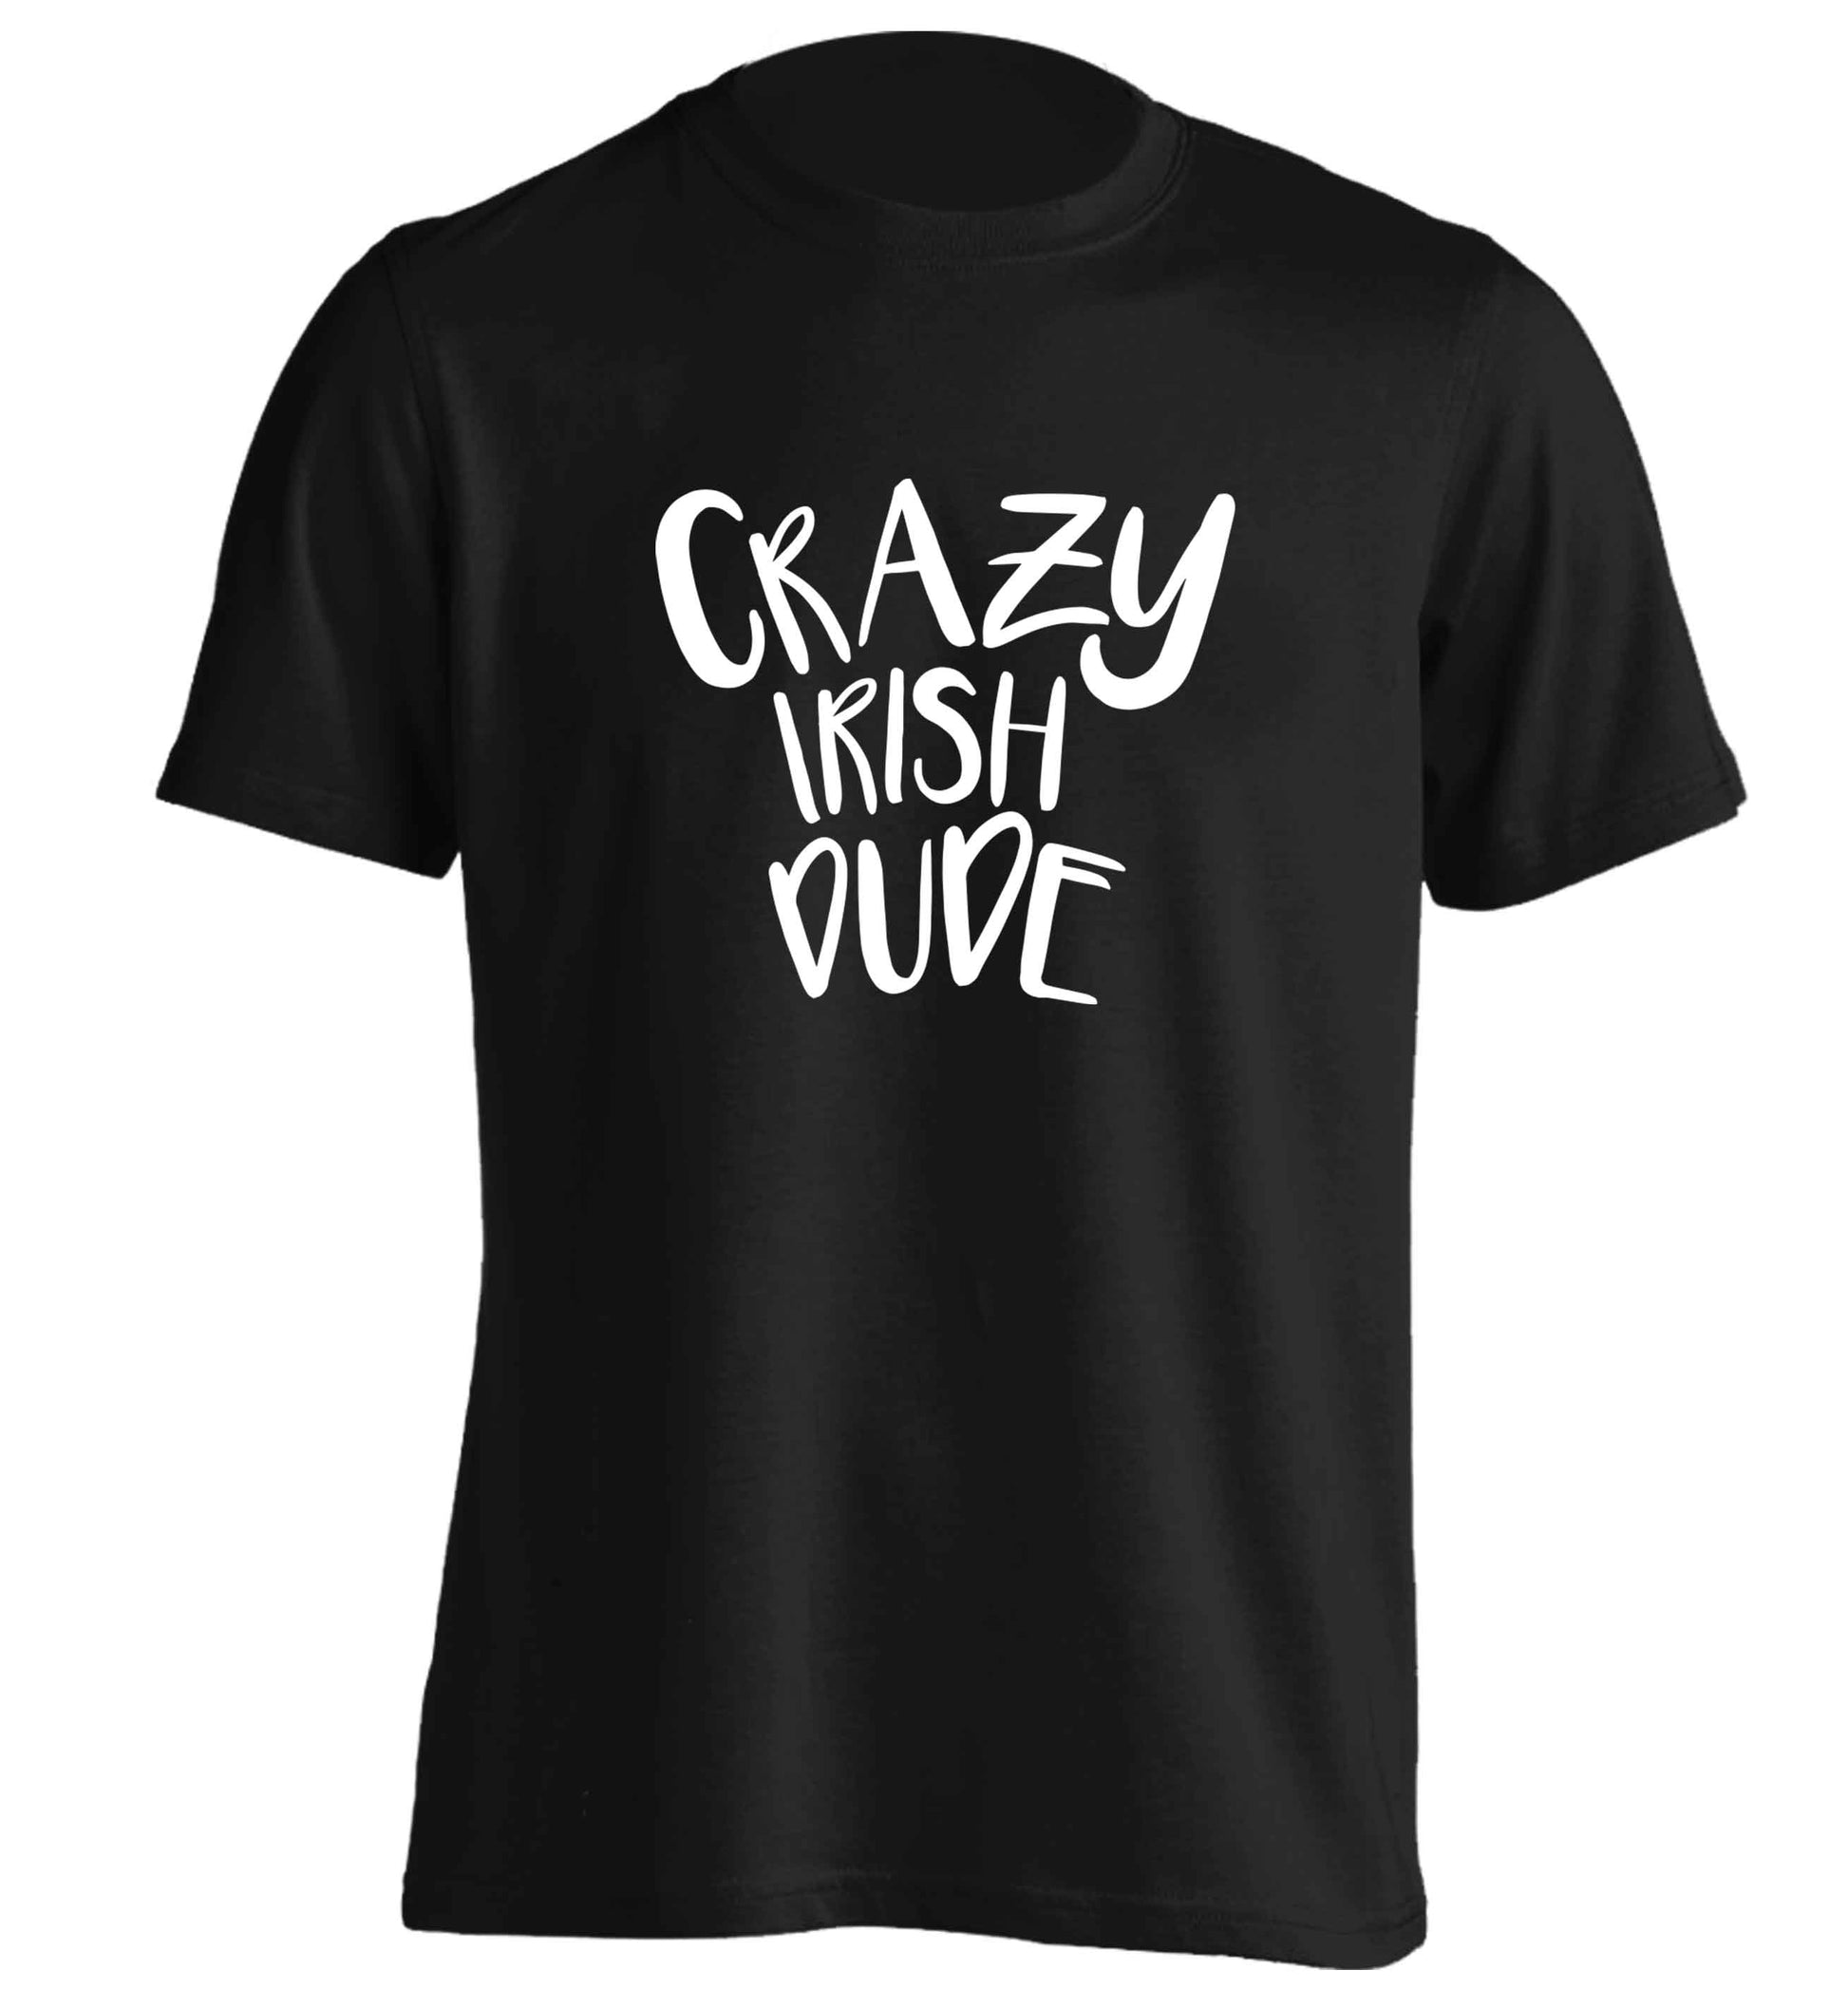 Crazy Irish dude adults unisex black Tshirt 2XL